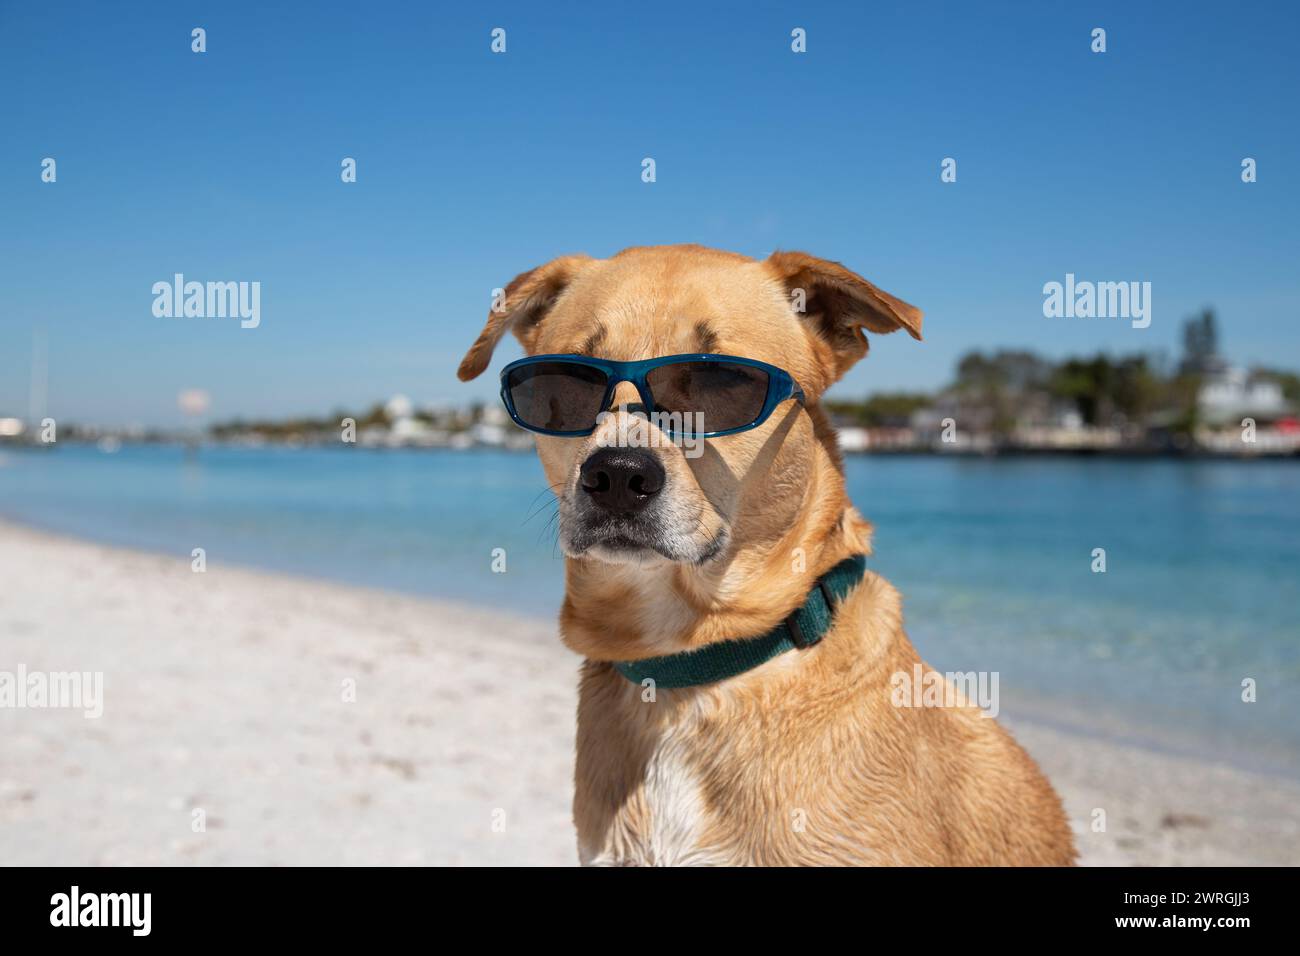 Labrador retriever wearing sunglasses sitting on beach, Florida, USA Stock Photo